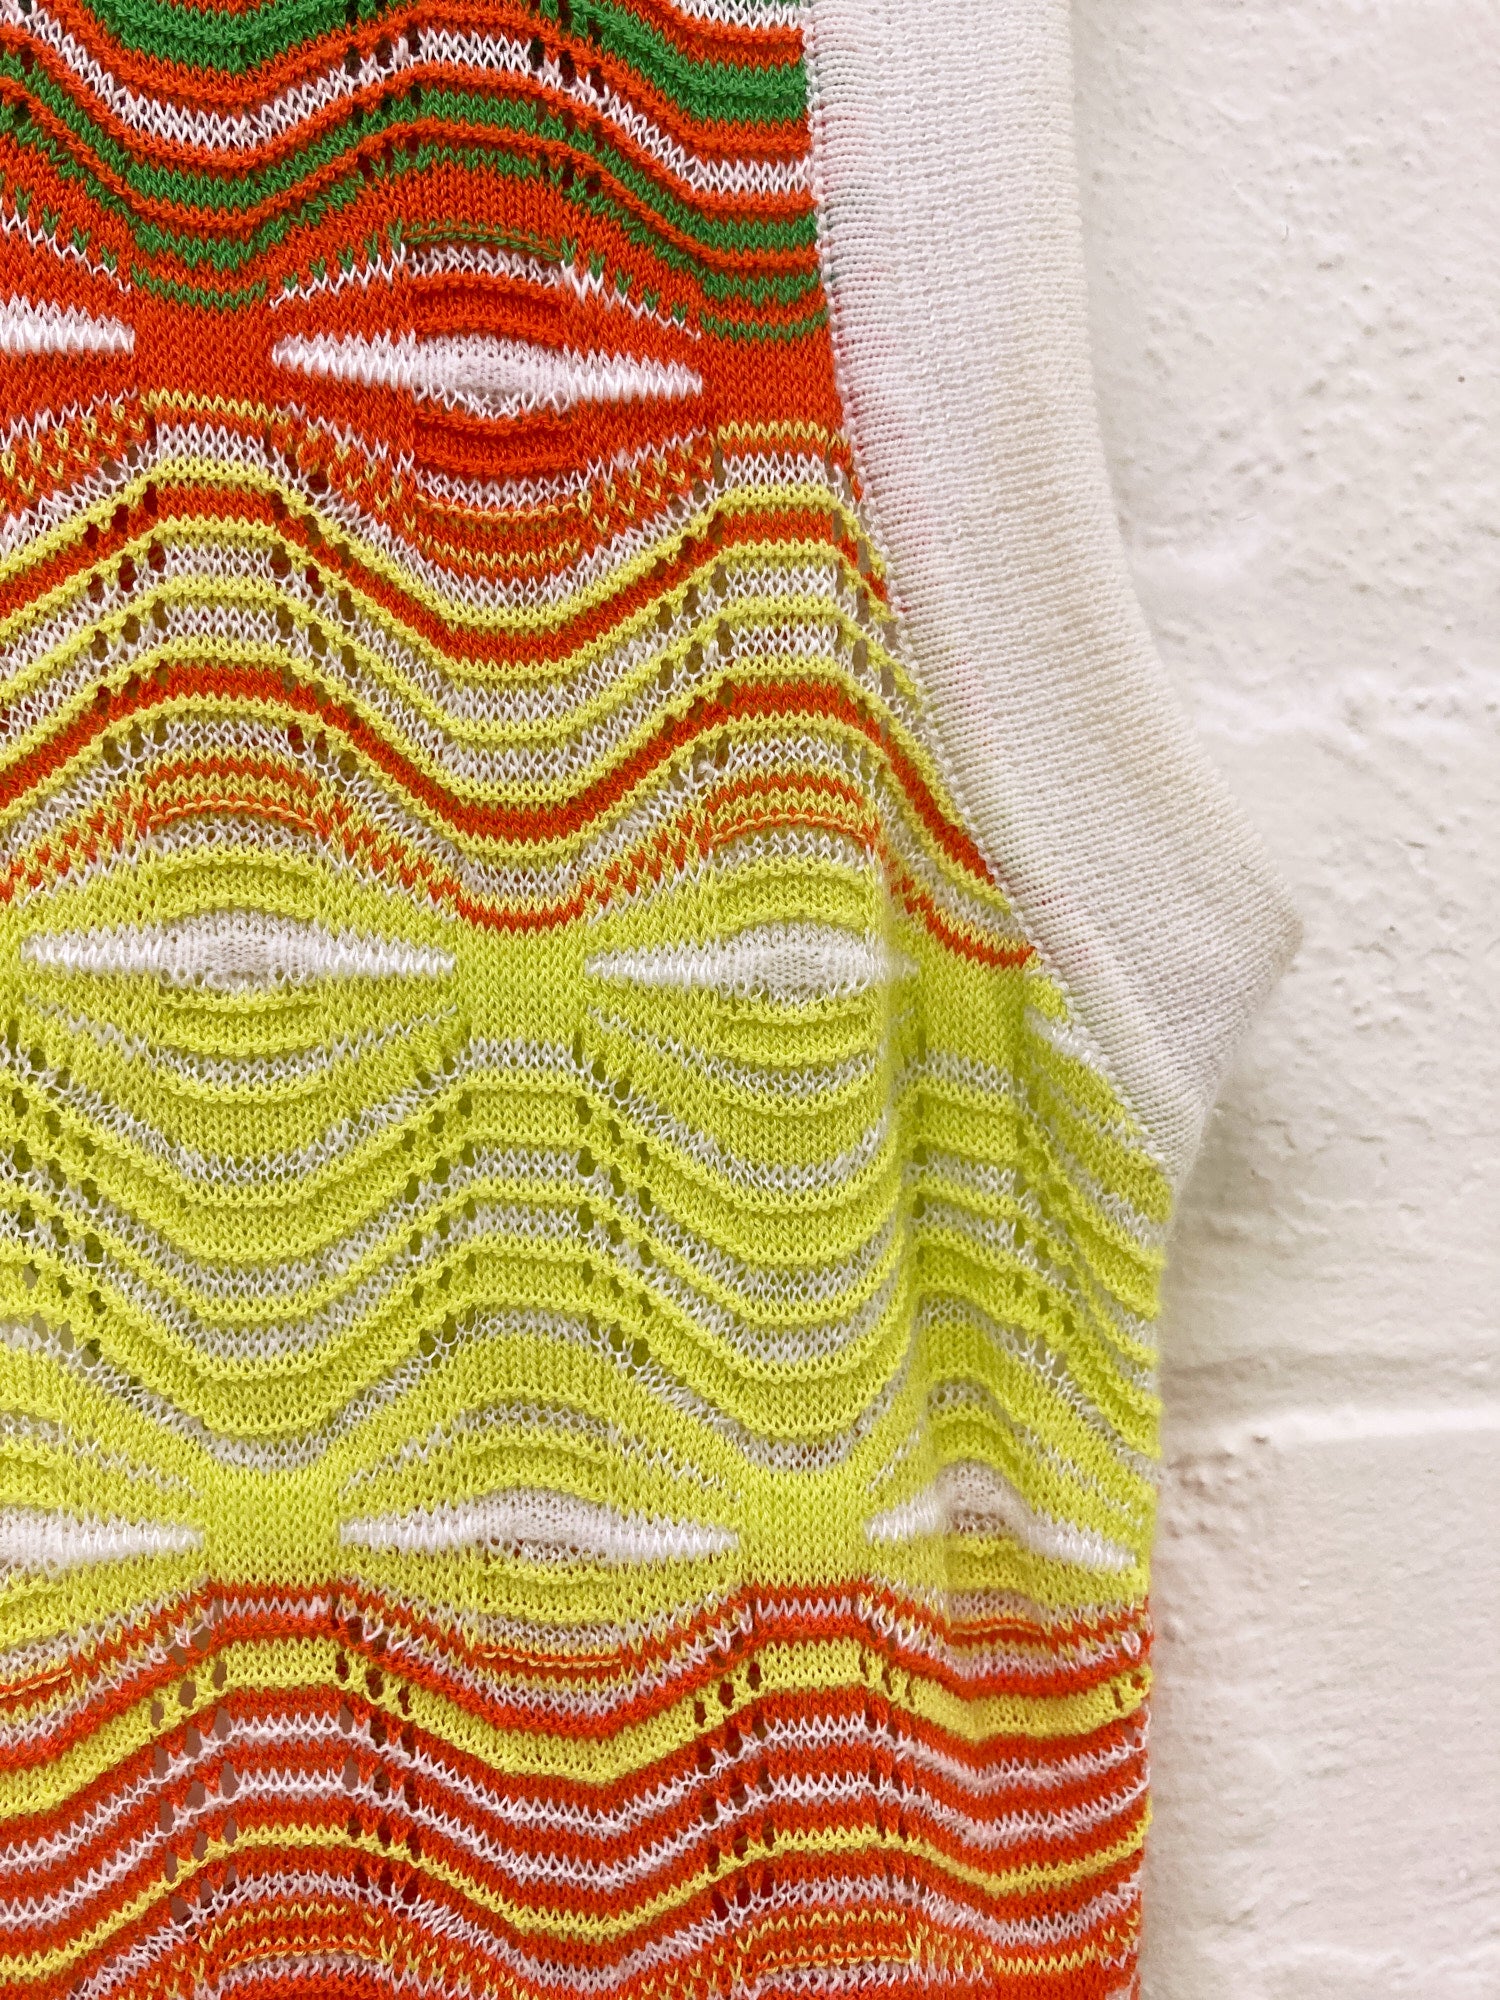 M Missoni multi color patterned knit sleeveless dress - IT 40